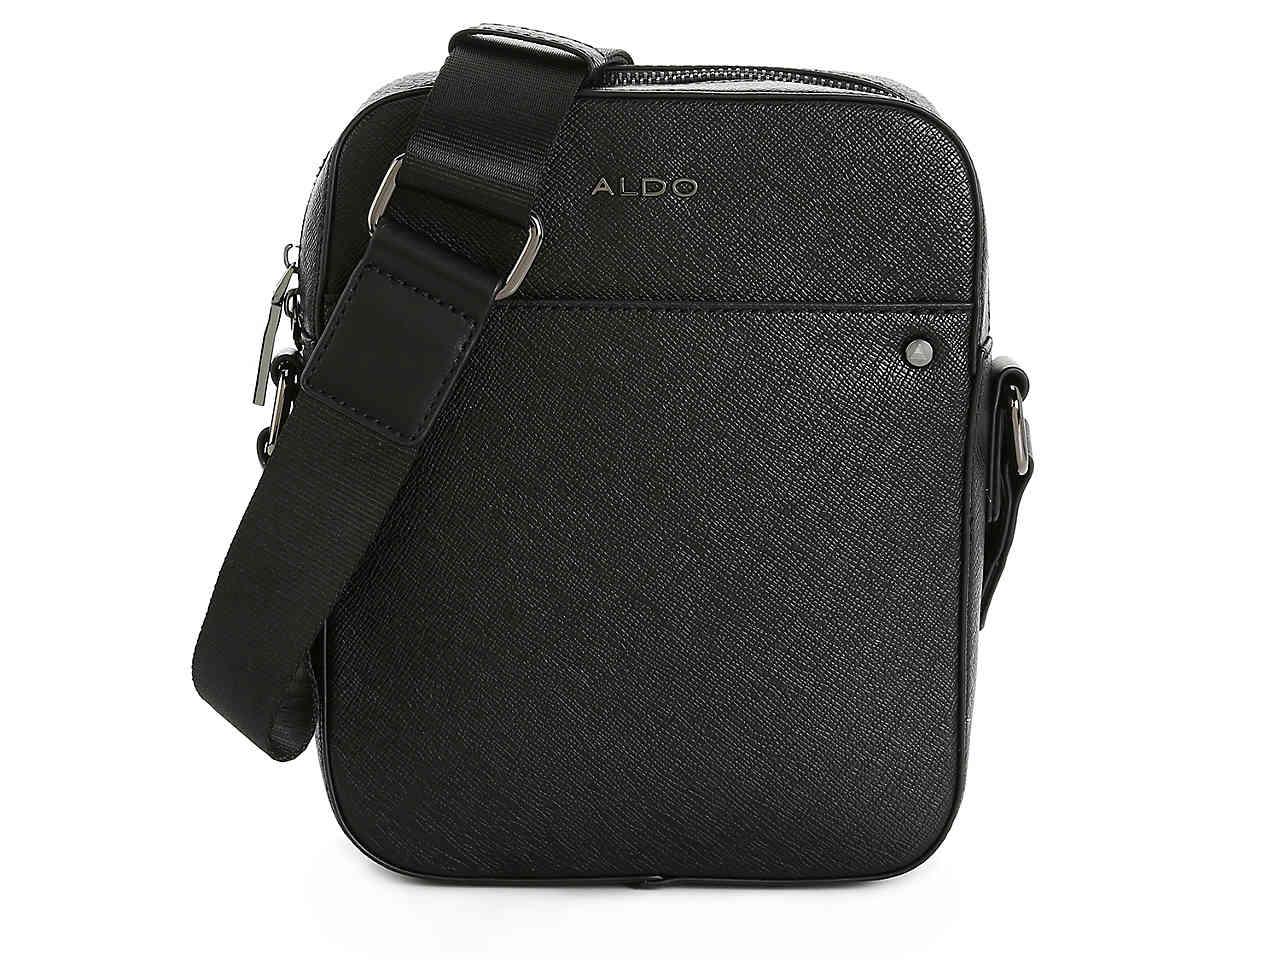 ALDO Canvas Poani Messenger Bag in Black for Men - Lyst